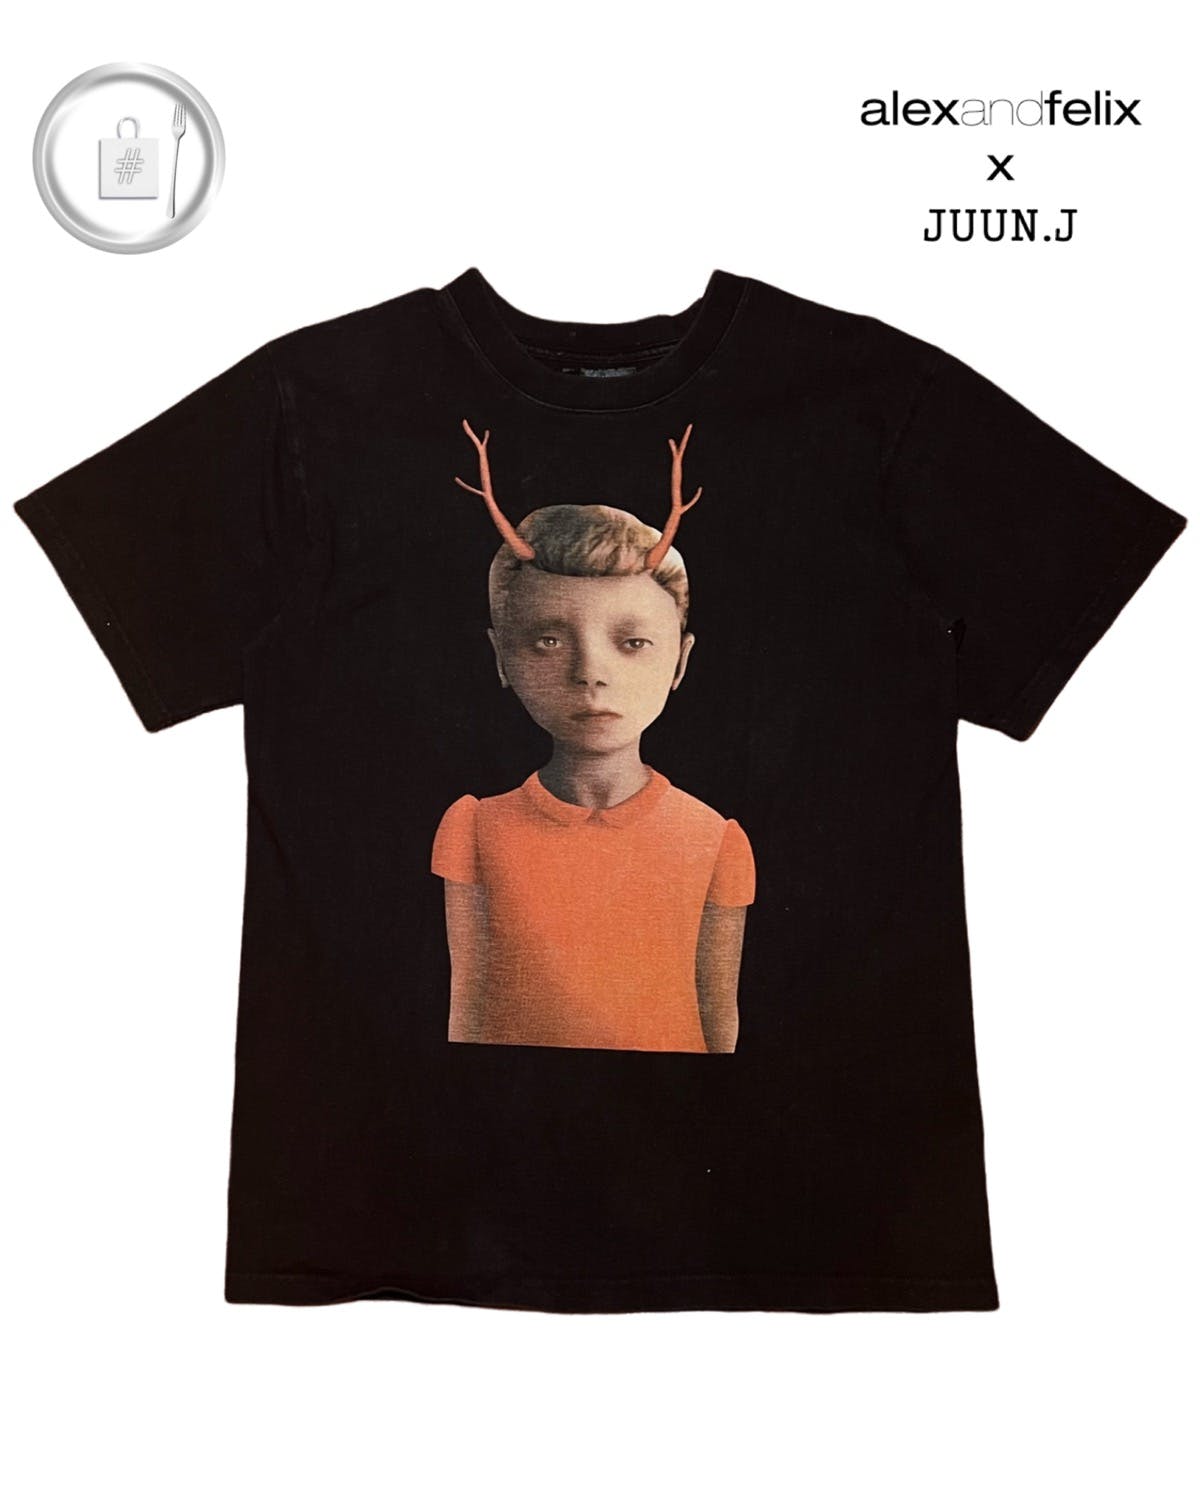 Demon Child t-shirt - 1